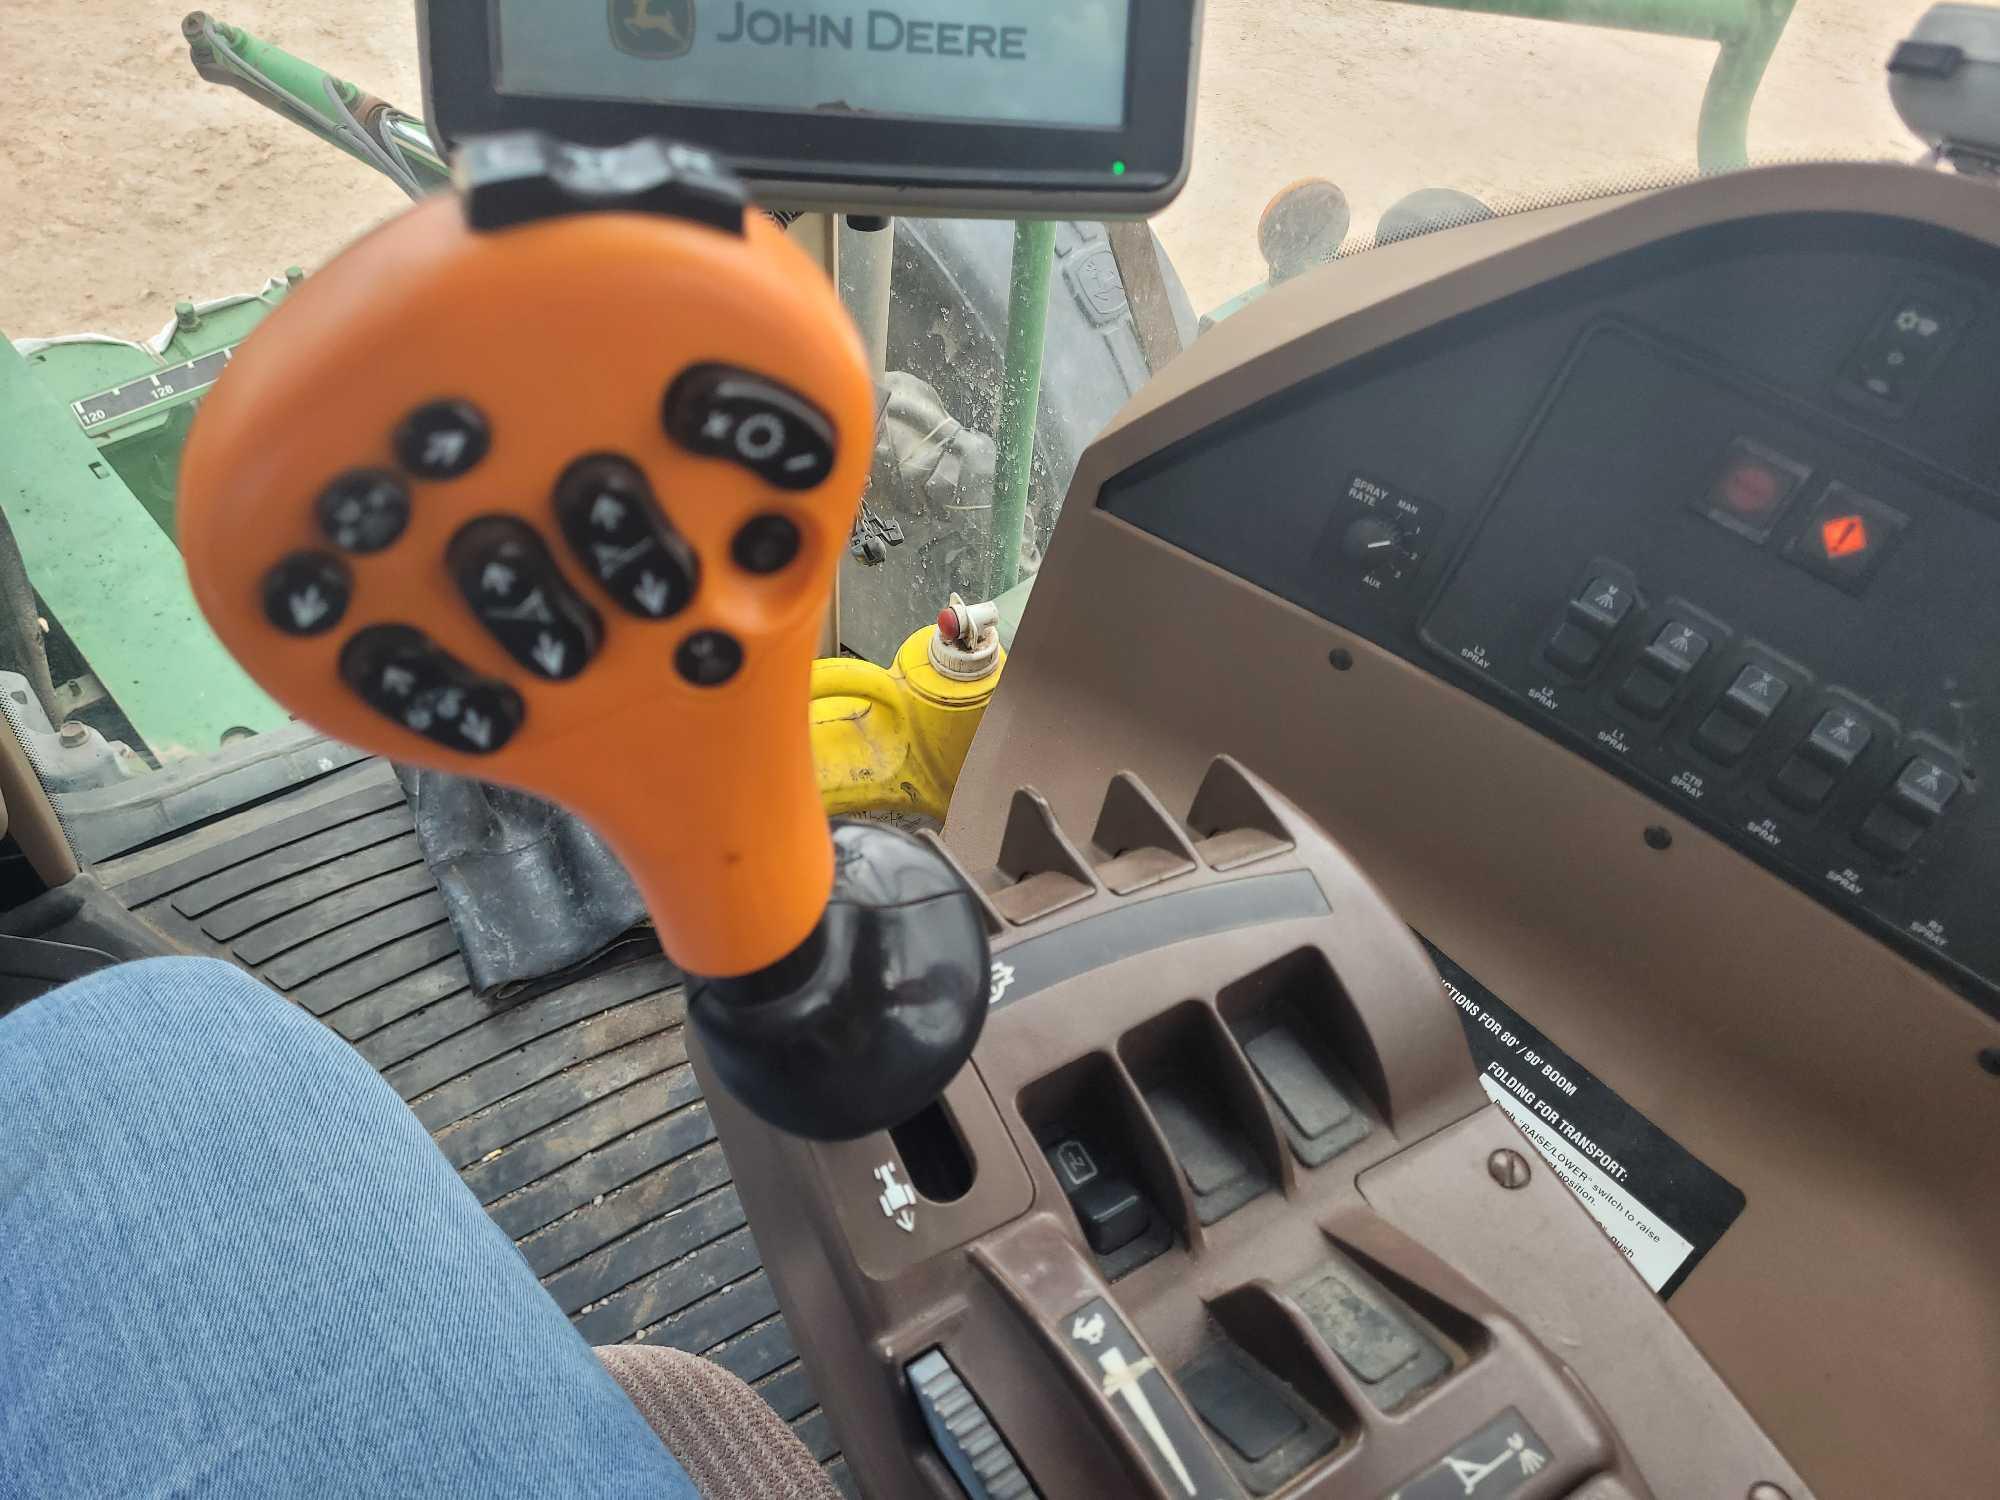 John Deere 4720 4WD Self-Propelled Sprayer